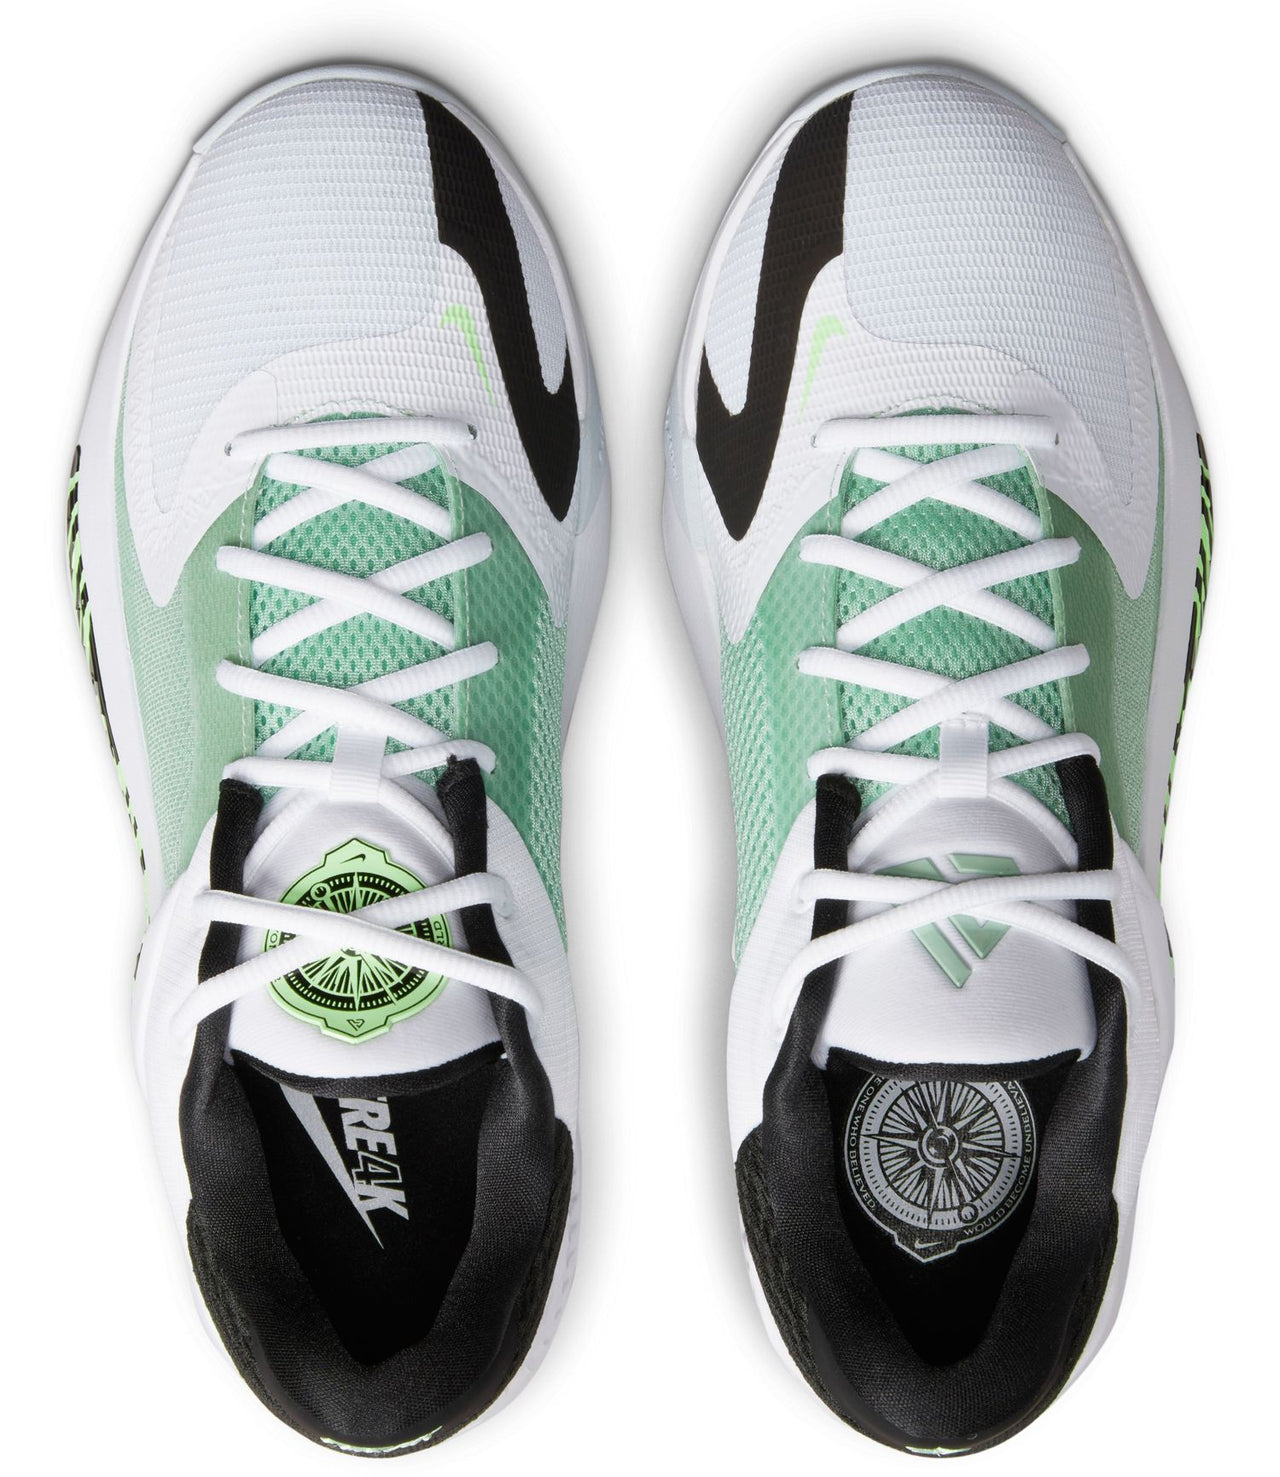 Nike Zoom Freak 4 Basketball Shoes